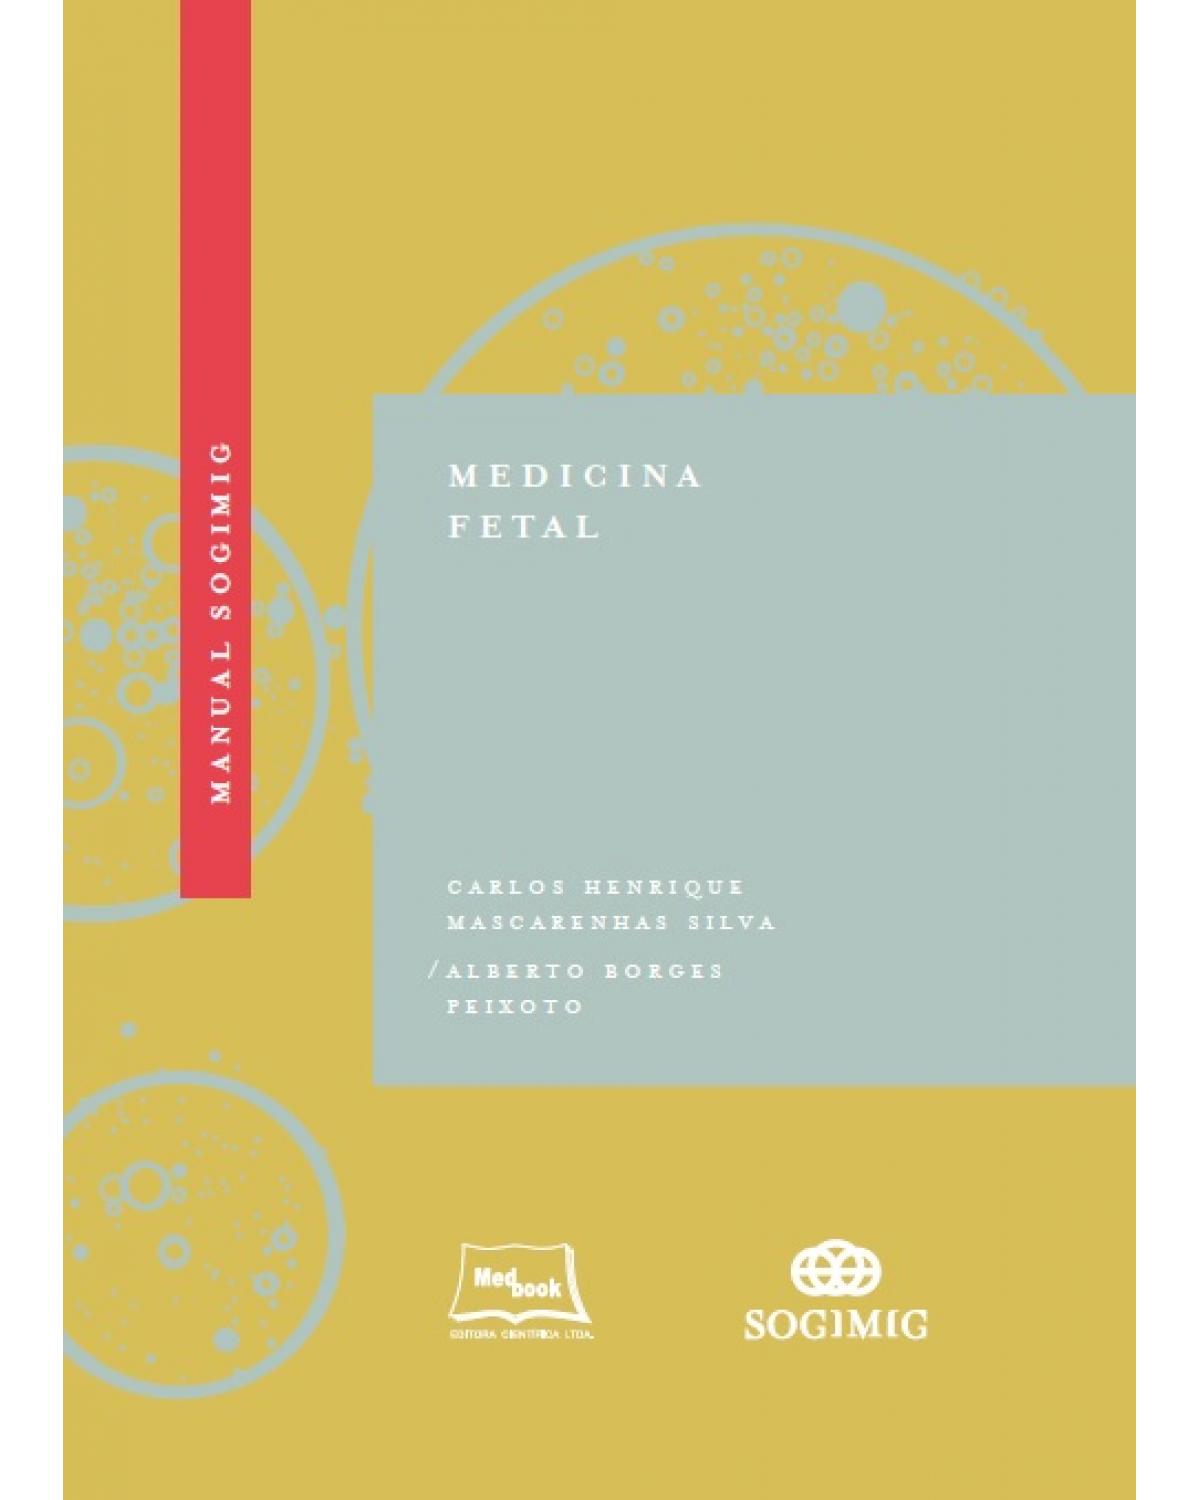 Manual SOGIMIG de medicina fetal - 1ª Edição | 2018